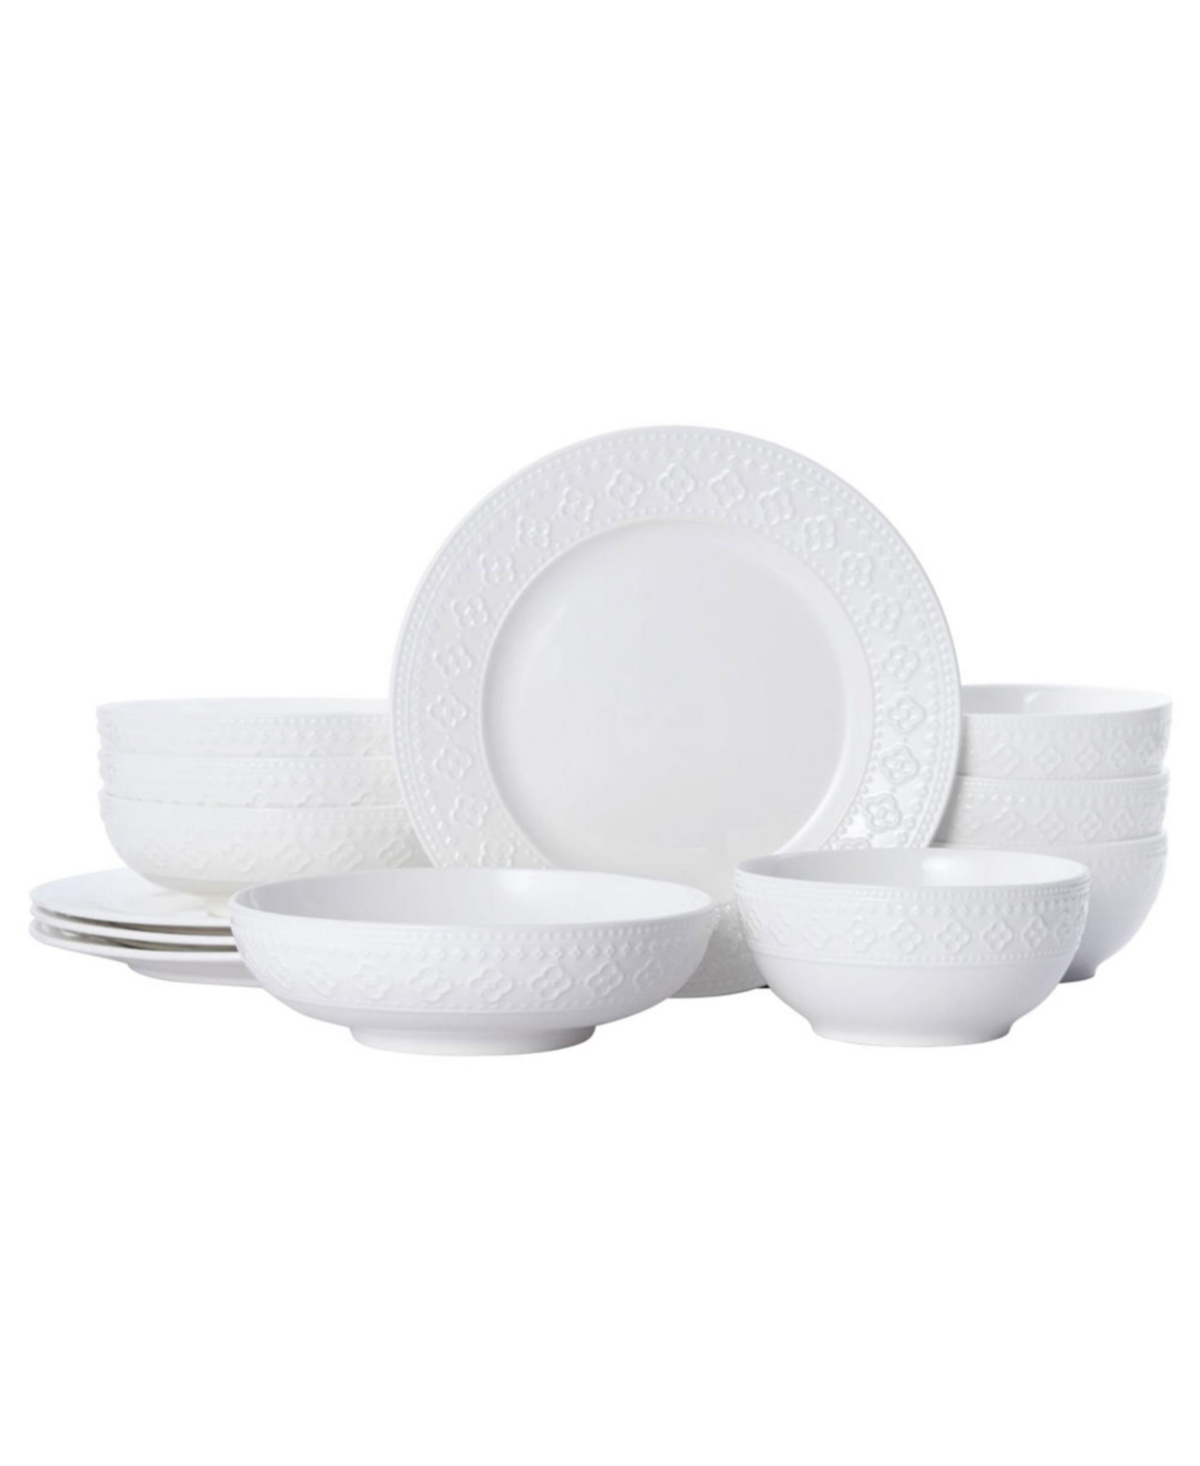 haisley 12 pc dinnerware set, service for 4 - White